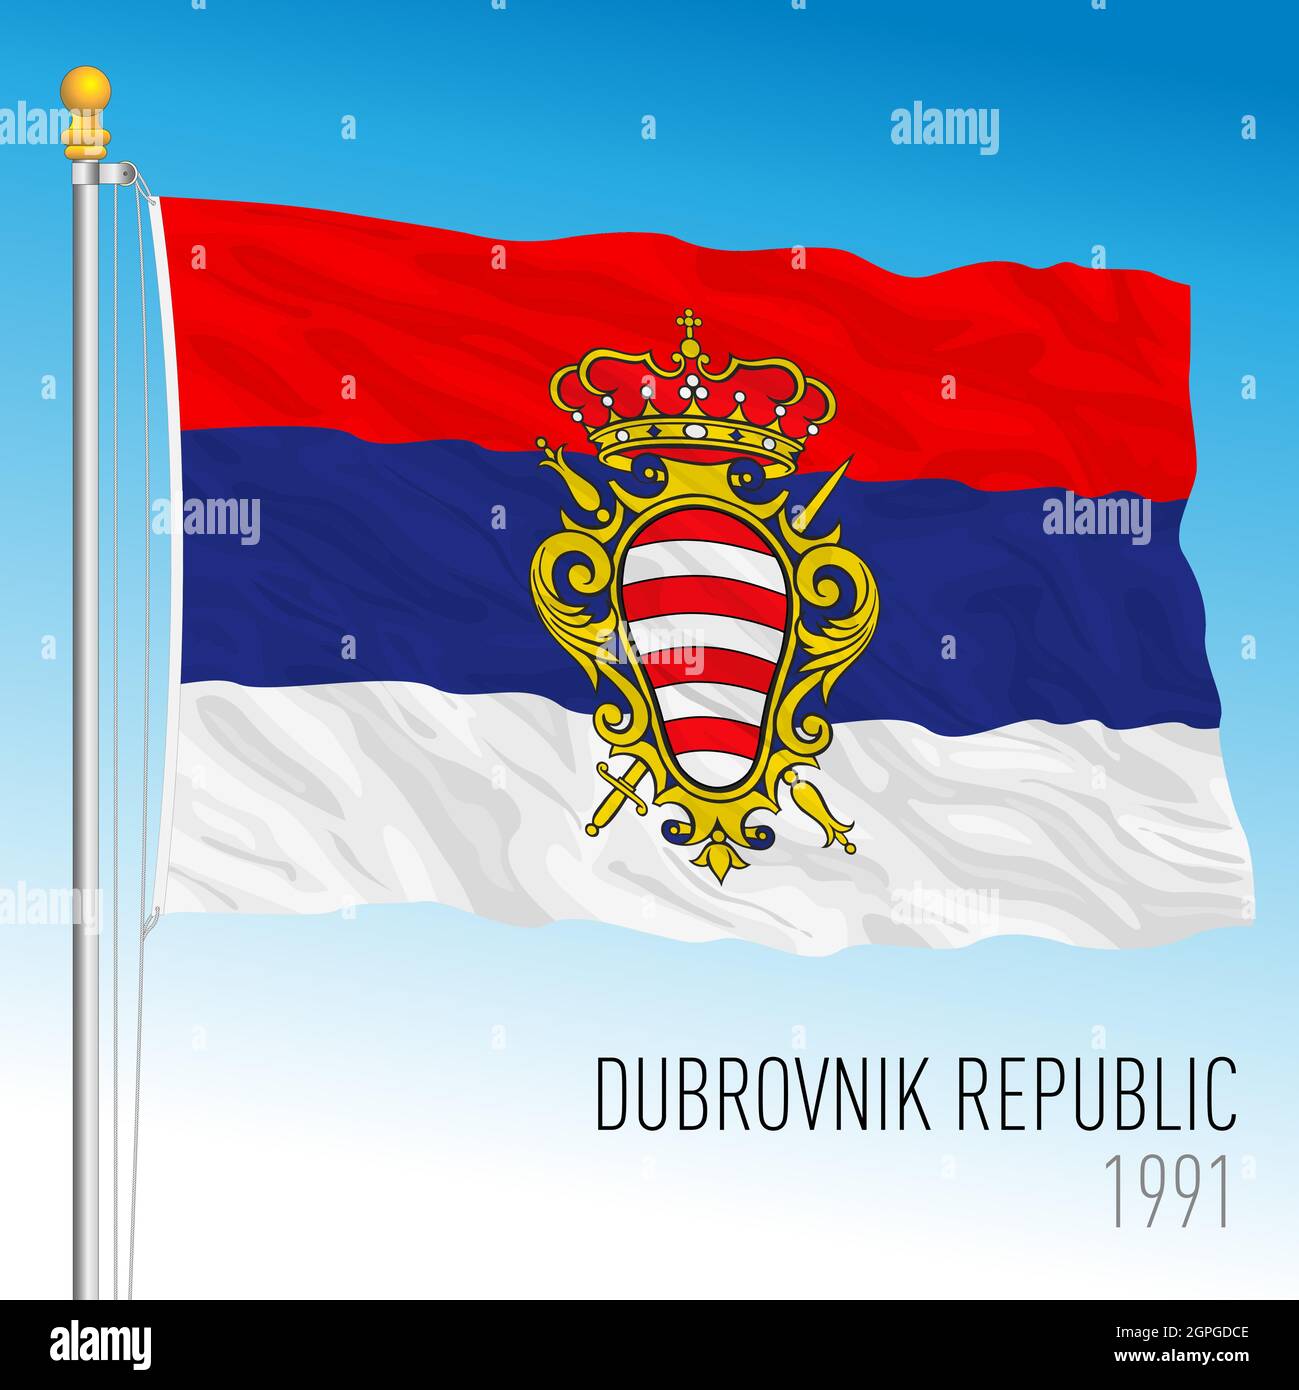 Dubrovnik Republik historische Flagge, Kroatien, Europa, 1991 Stock Vektor